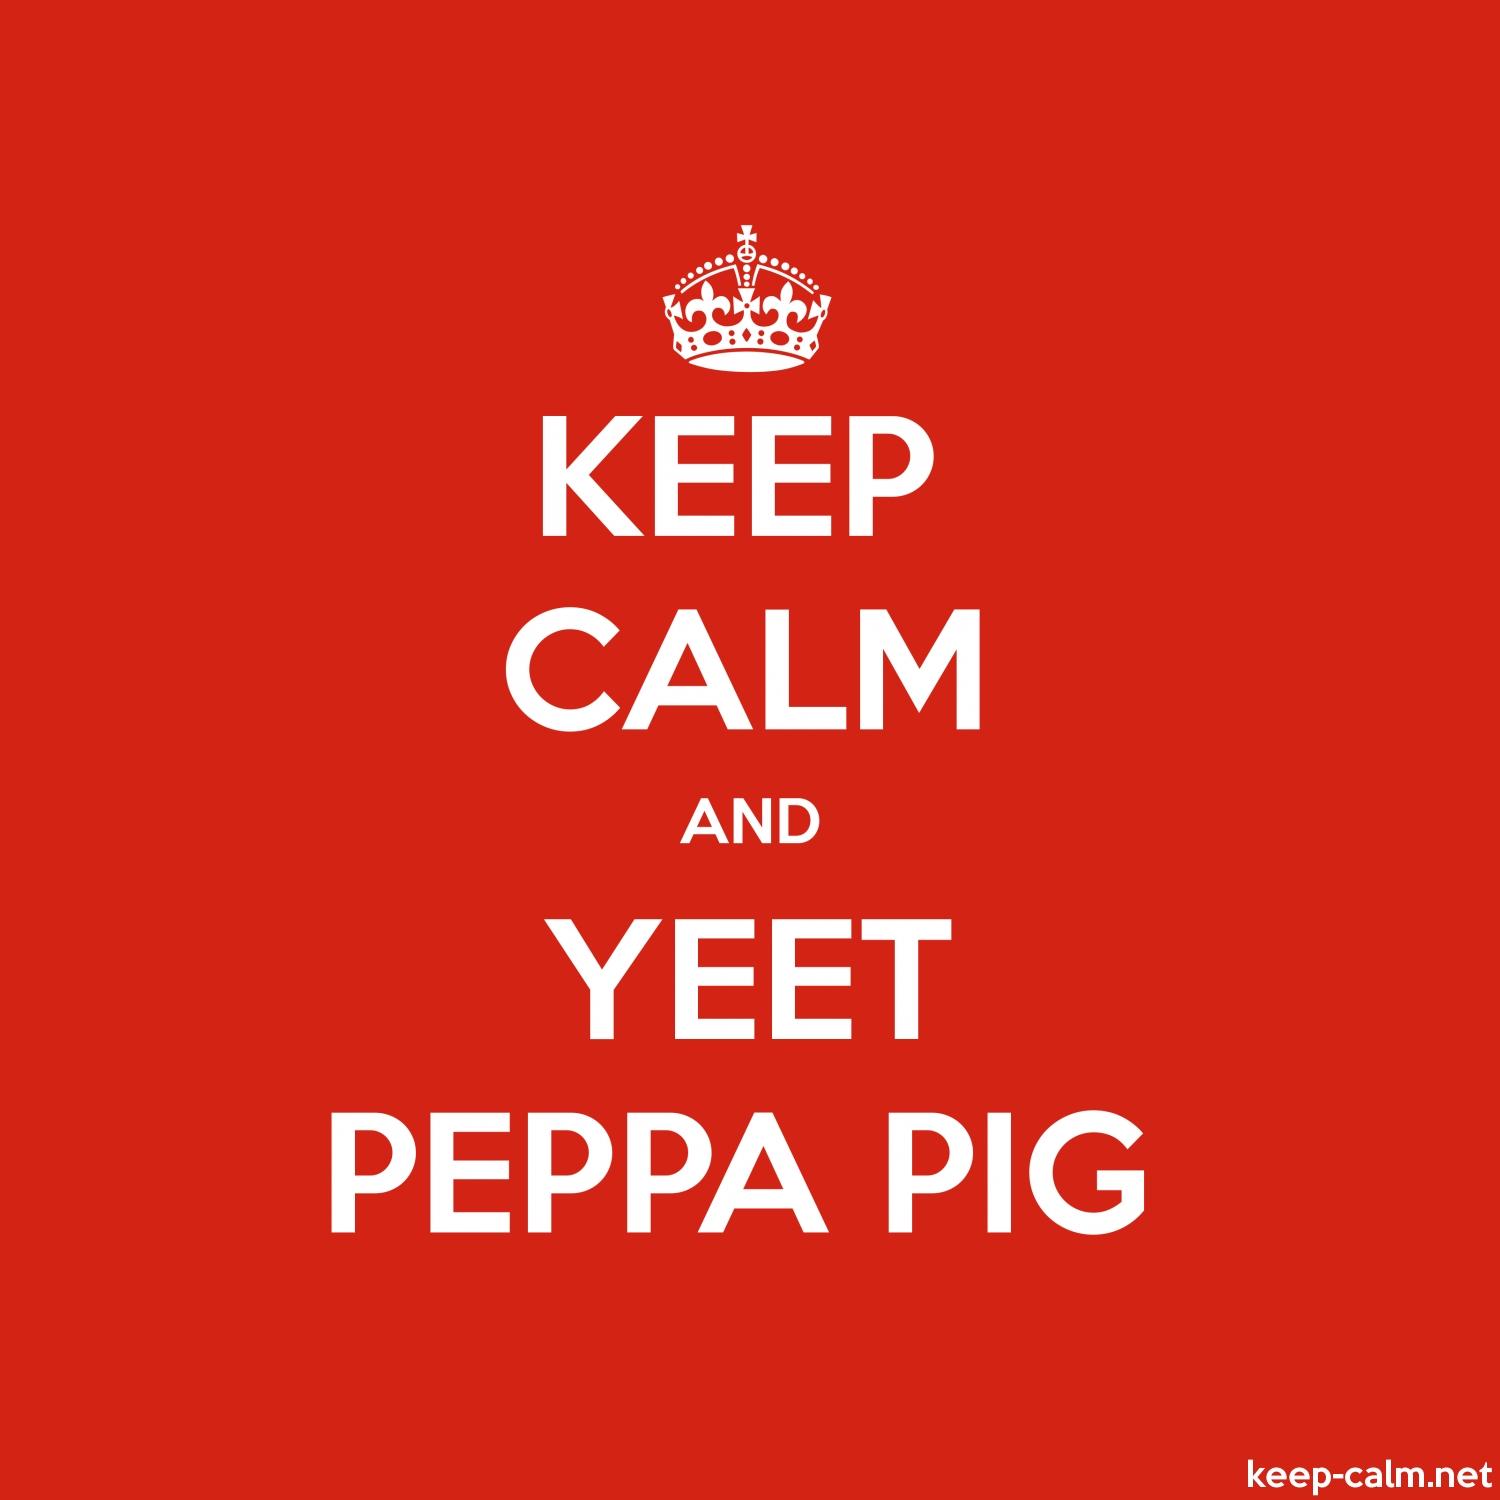 KEEP CALM AND YEET PEPPA PIG